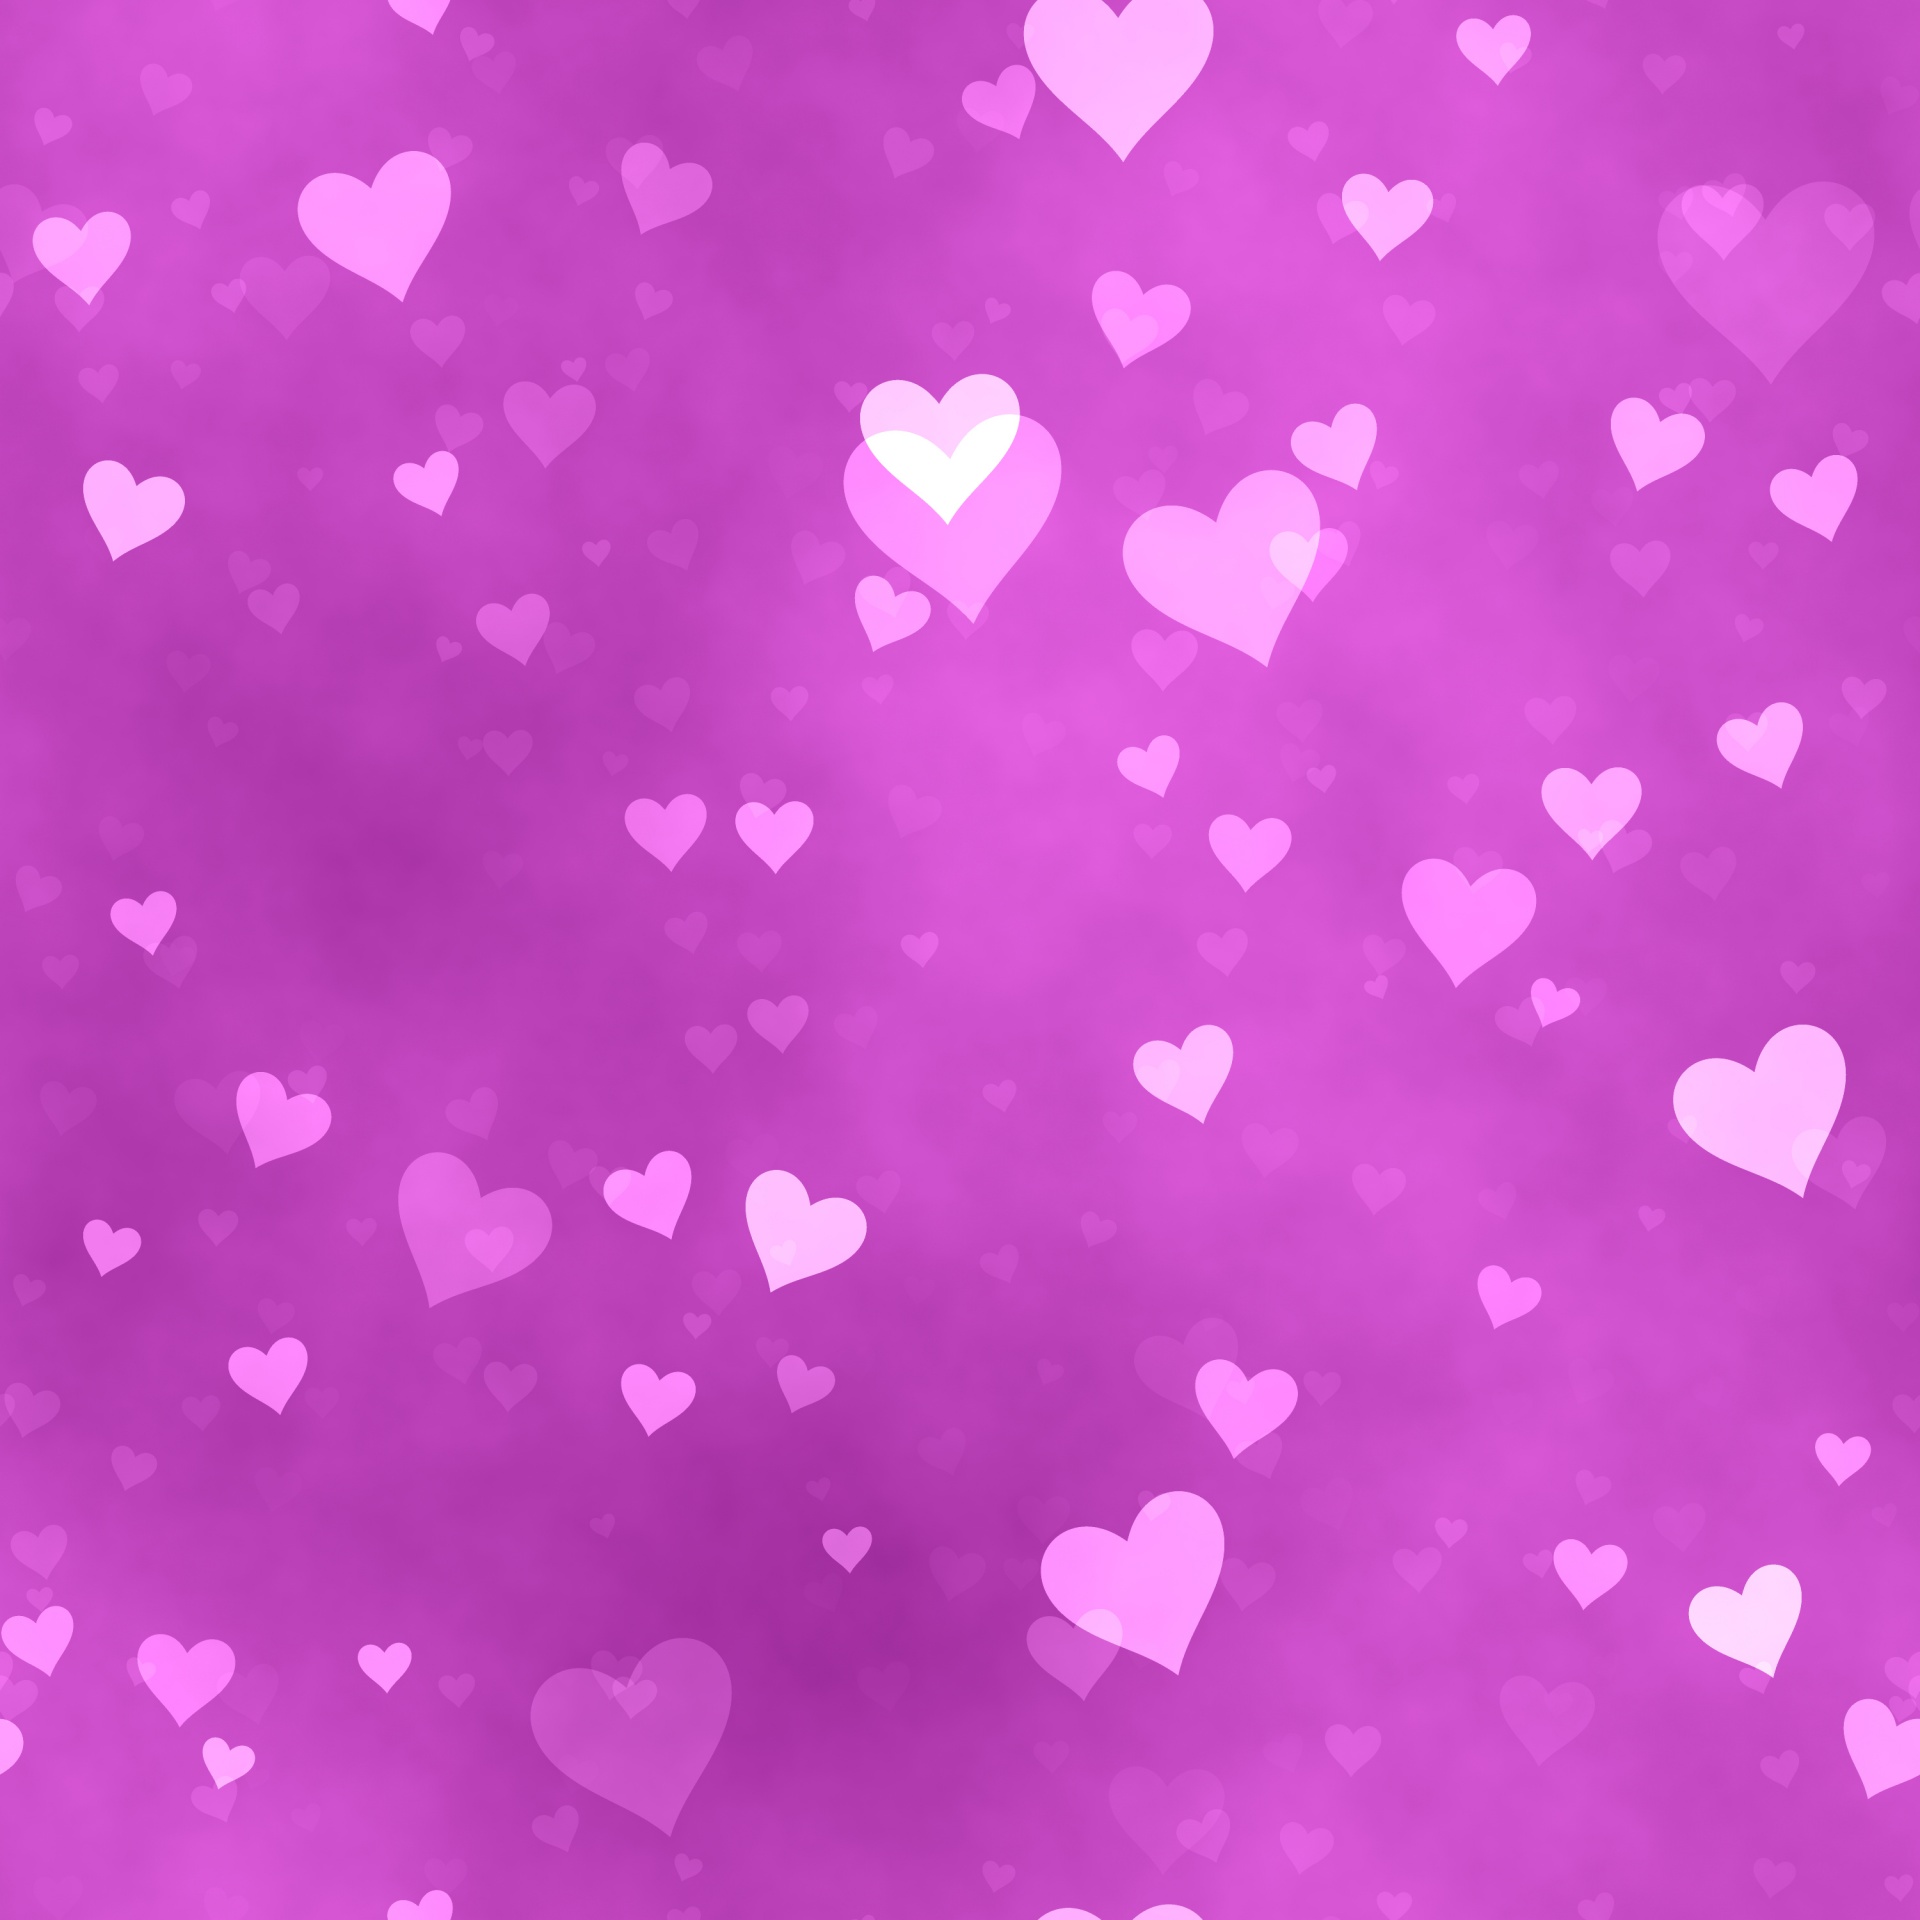 Download Backgrounds, Hd, Heart, Nice, Purple, Heart Background, Love, #663...